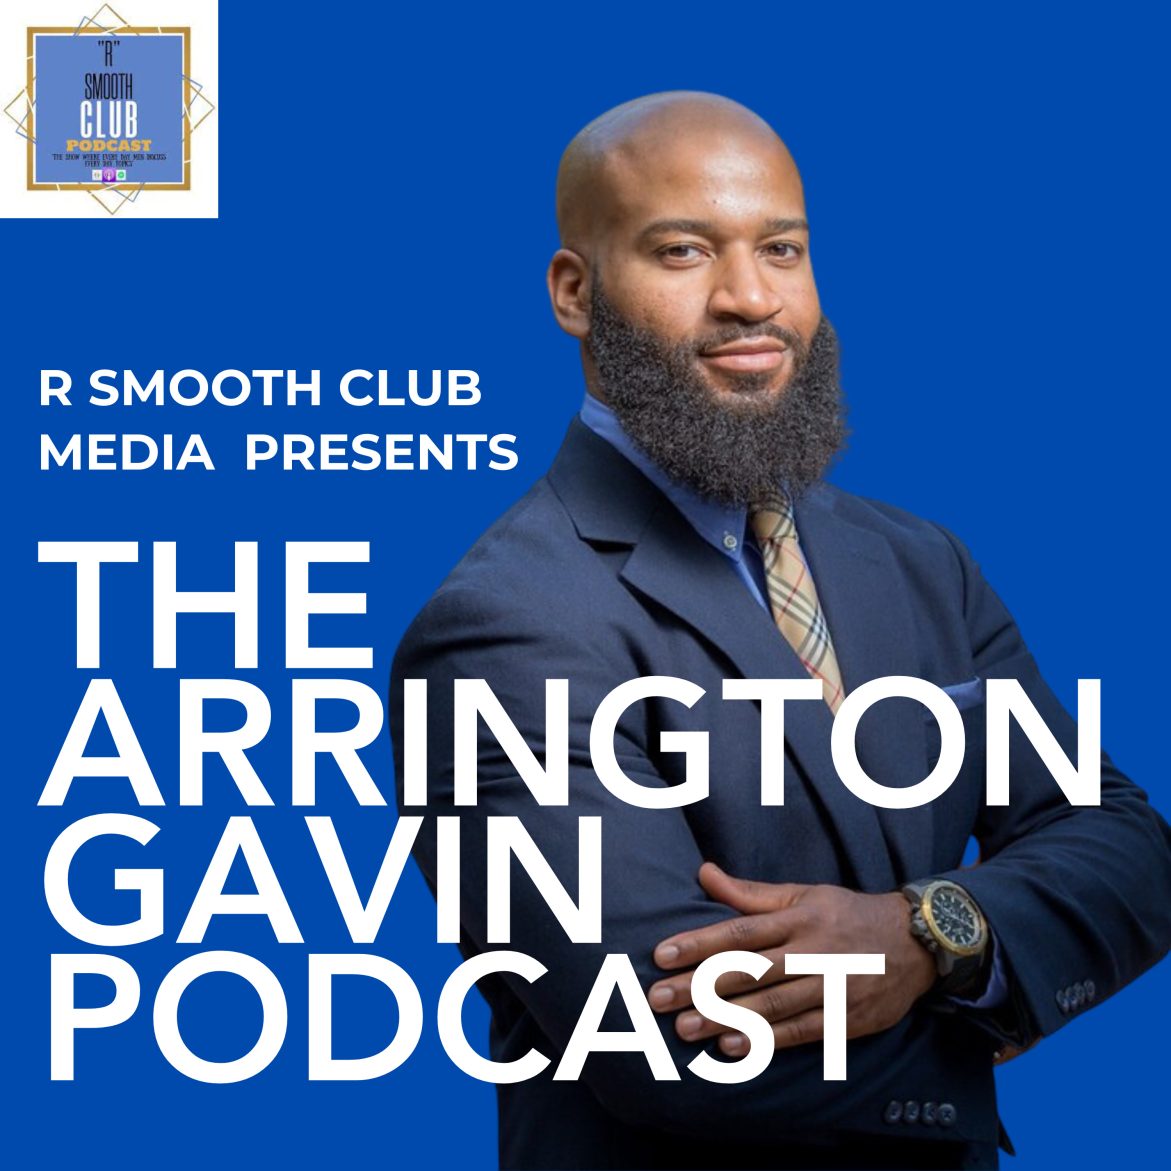 Black Podcasting - The Arrington Gavin Podcast Ep.1 "Always Bet on Black"